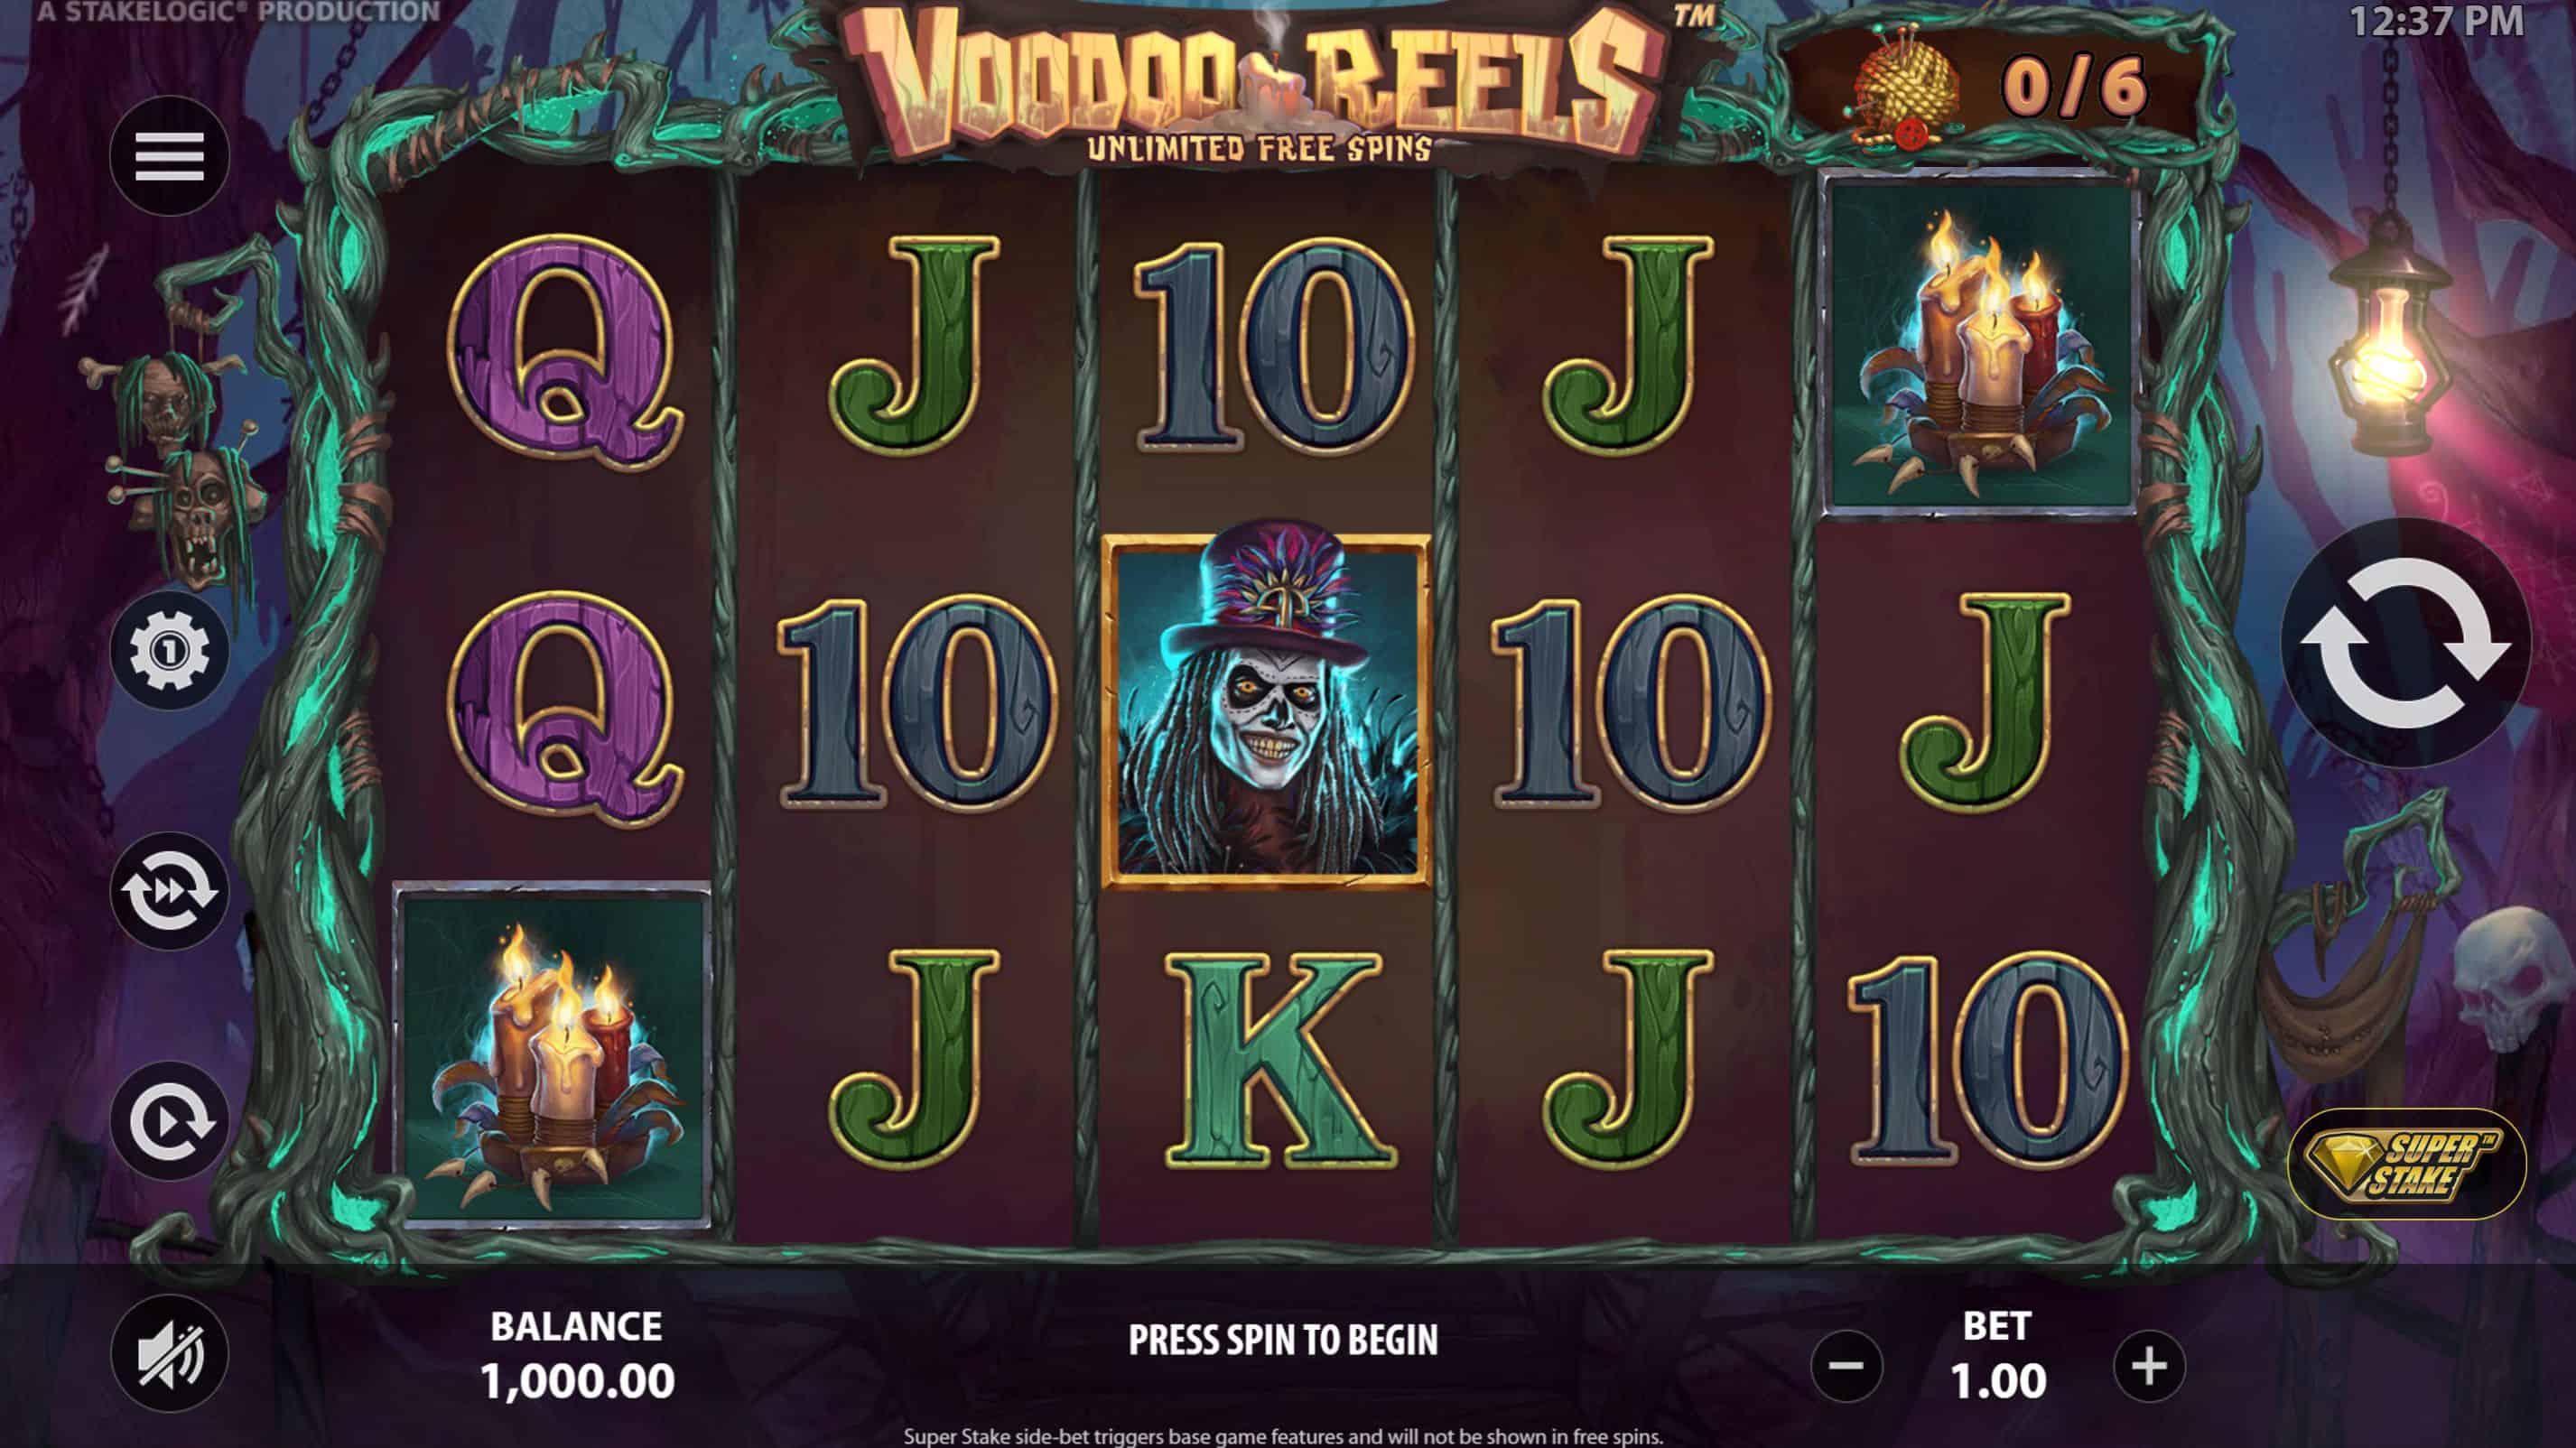 Voodoo Reels Slot Game Free Play at Casino Ireland 01